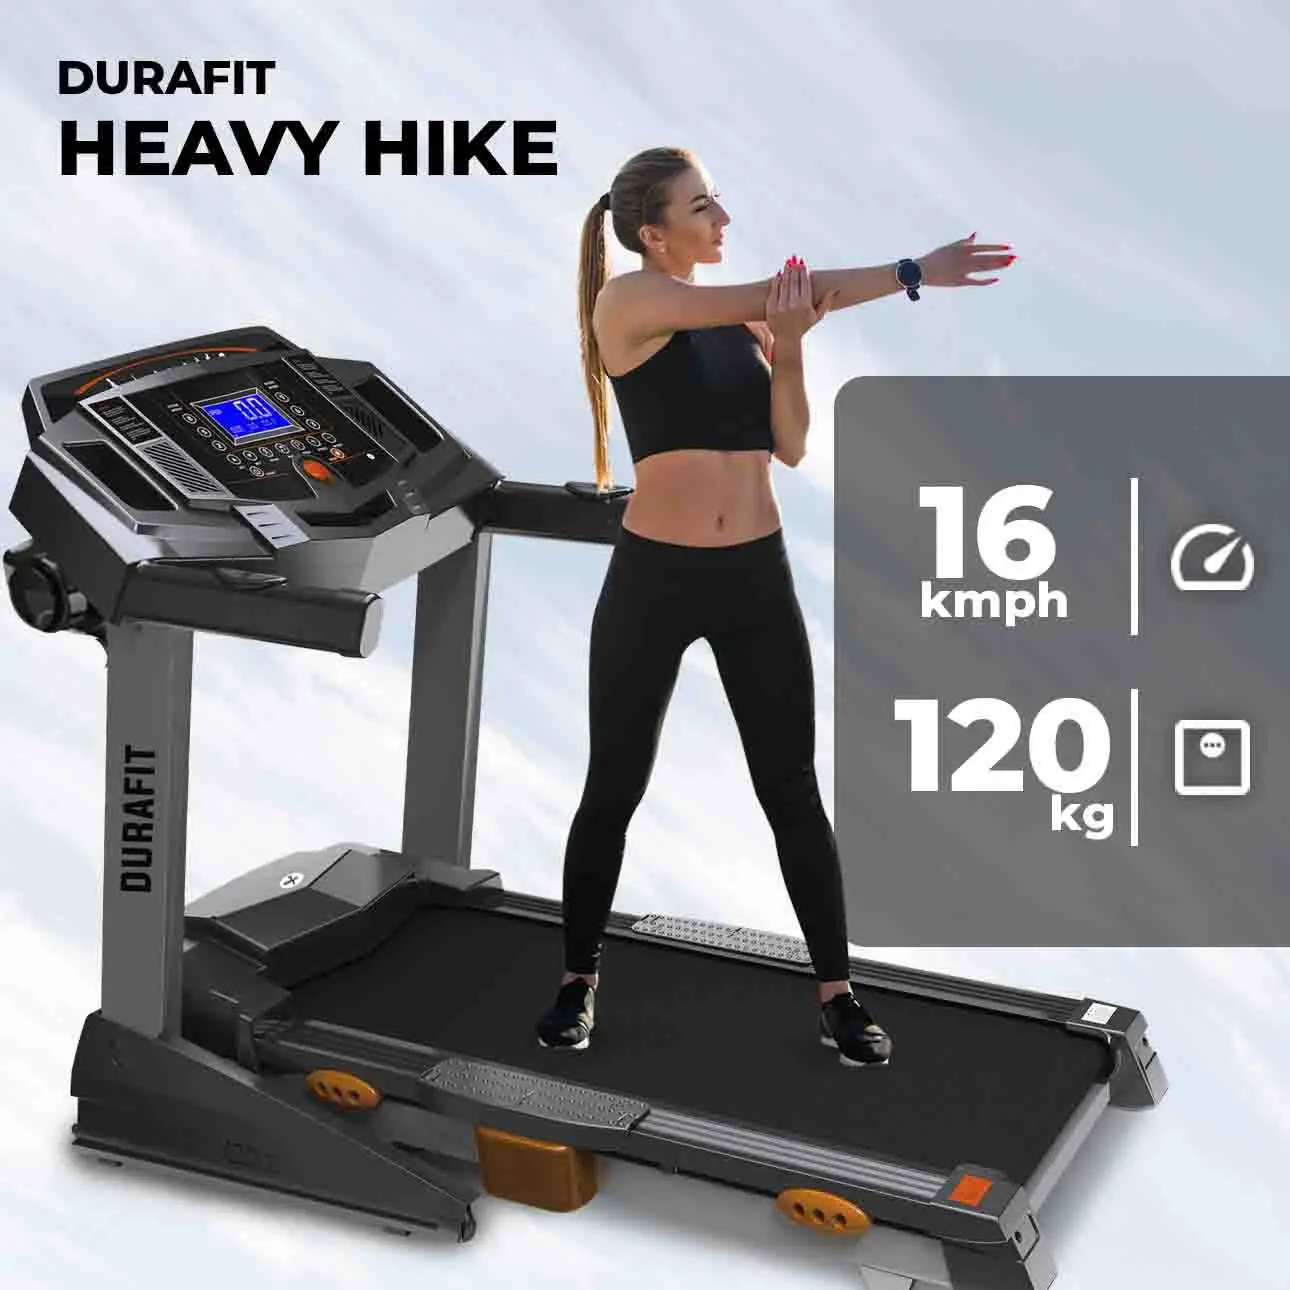 Durafit Heavy hike Treadmill with 16kmph max speed